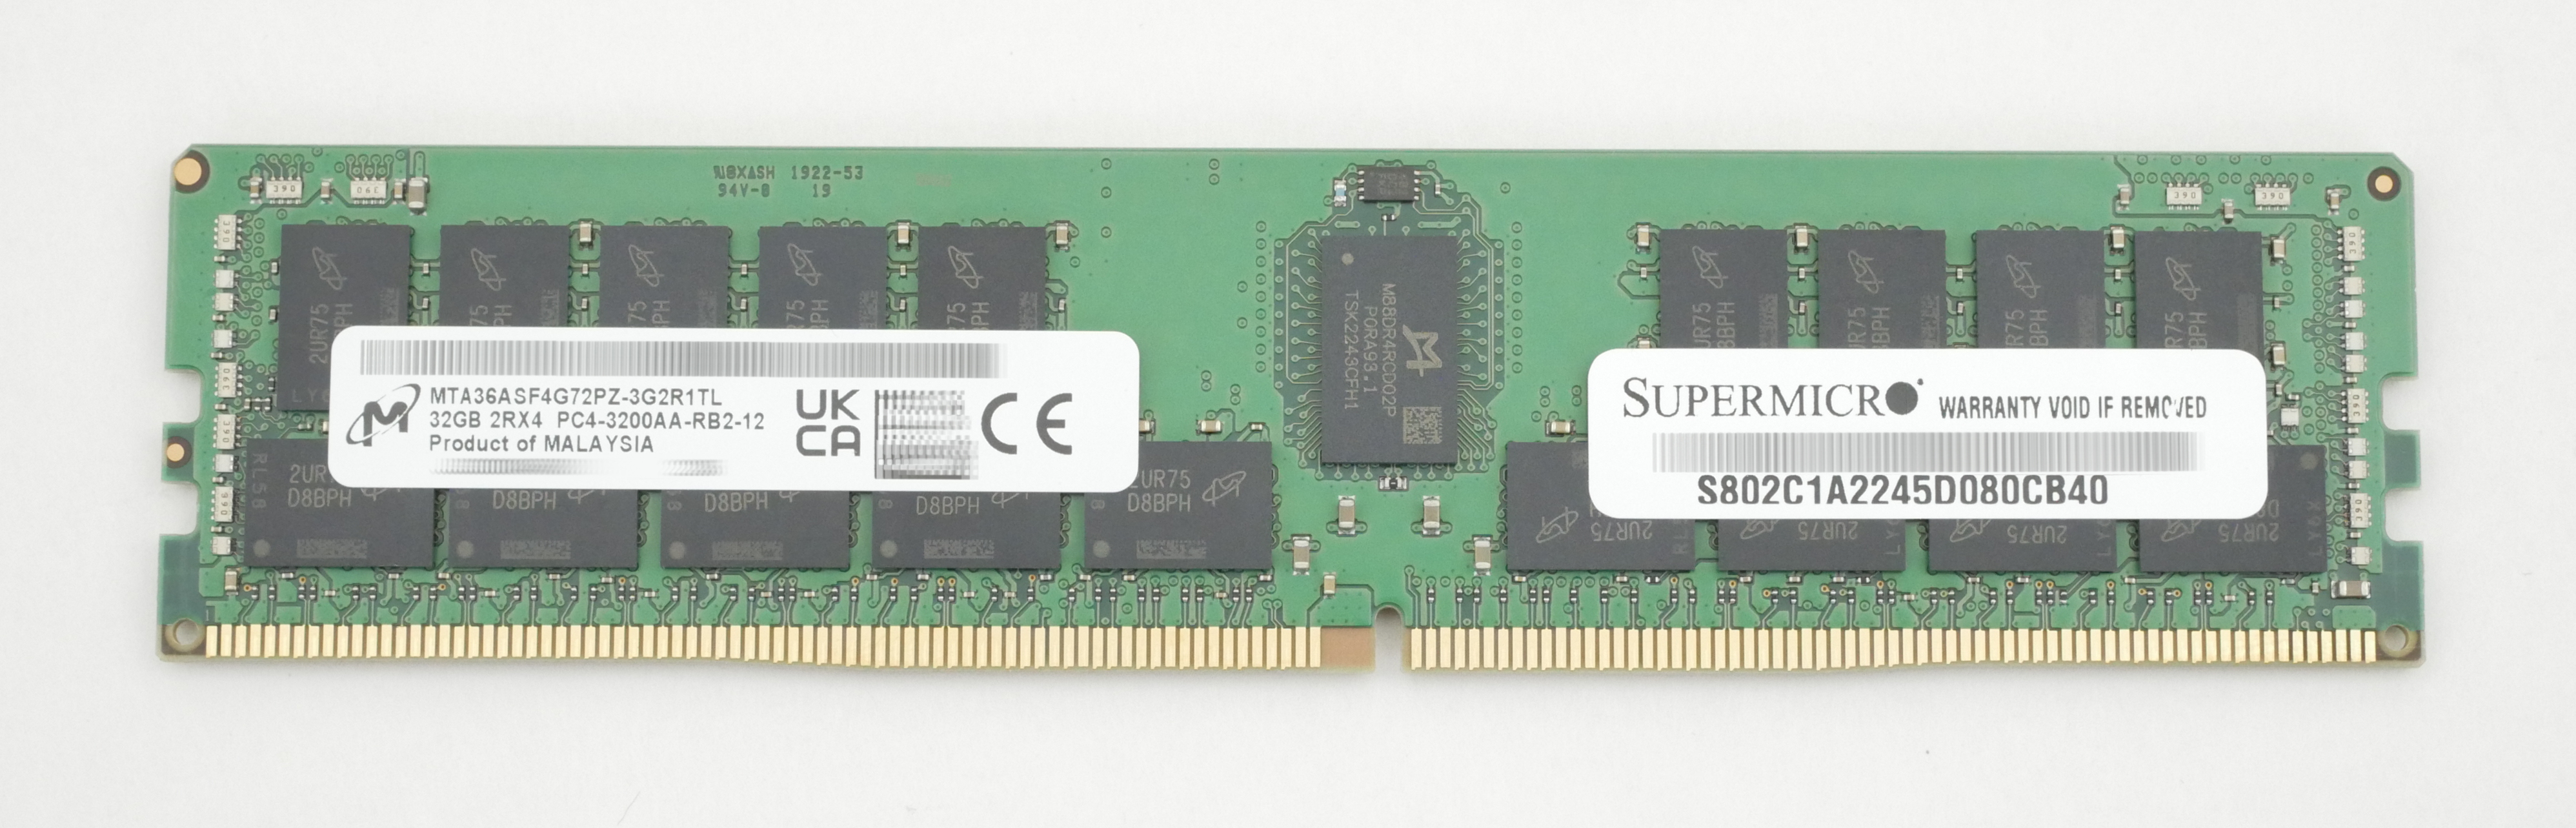 Supermicro 32GB PC4-3200AA-RB2-12 Server Memory MTA36ASF4G72PZ-3G2R1